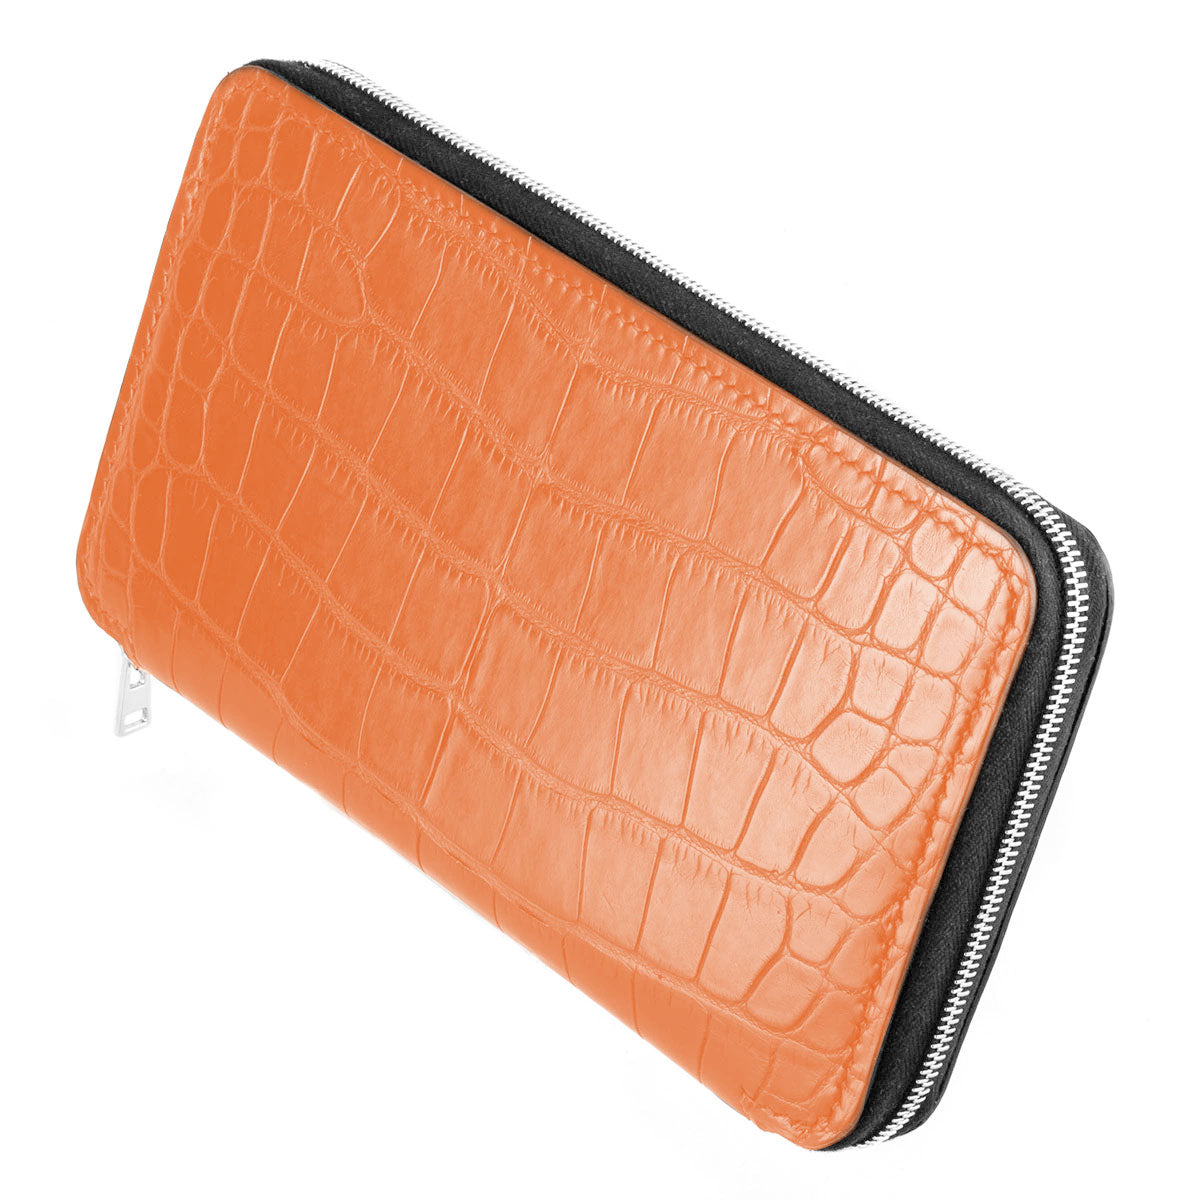 Blue crocodile wallet - Luxury leathergoods